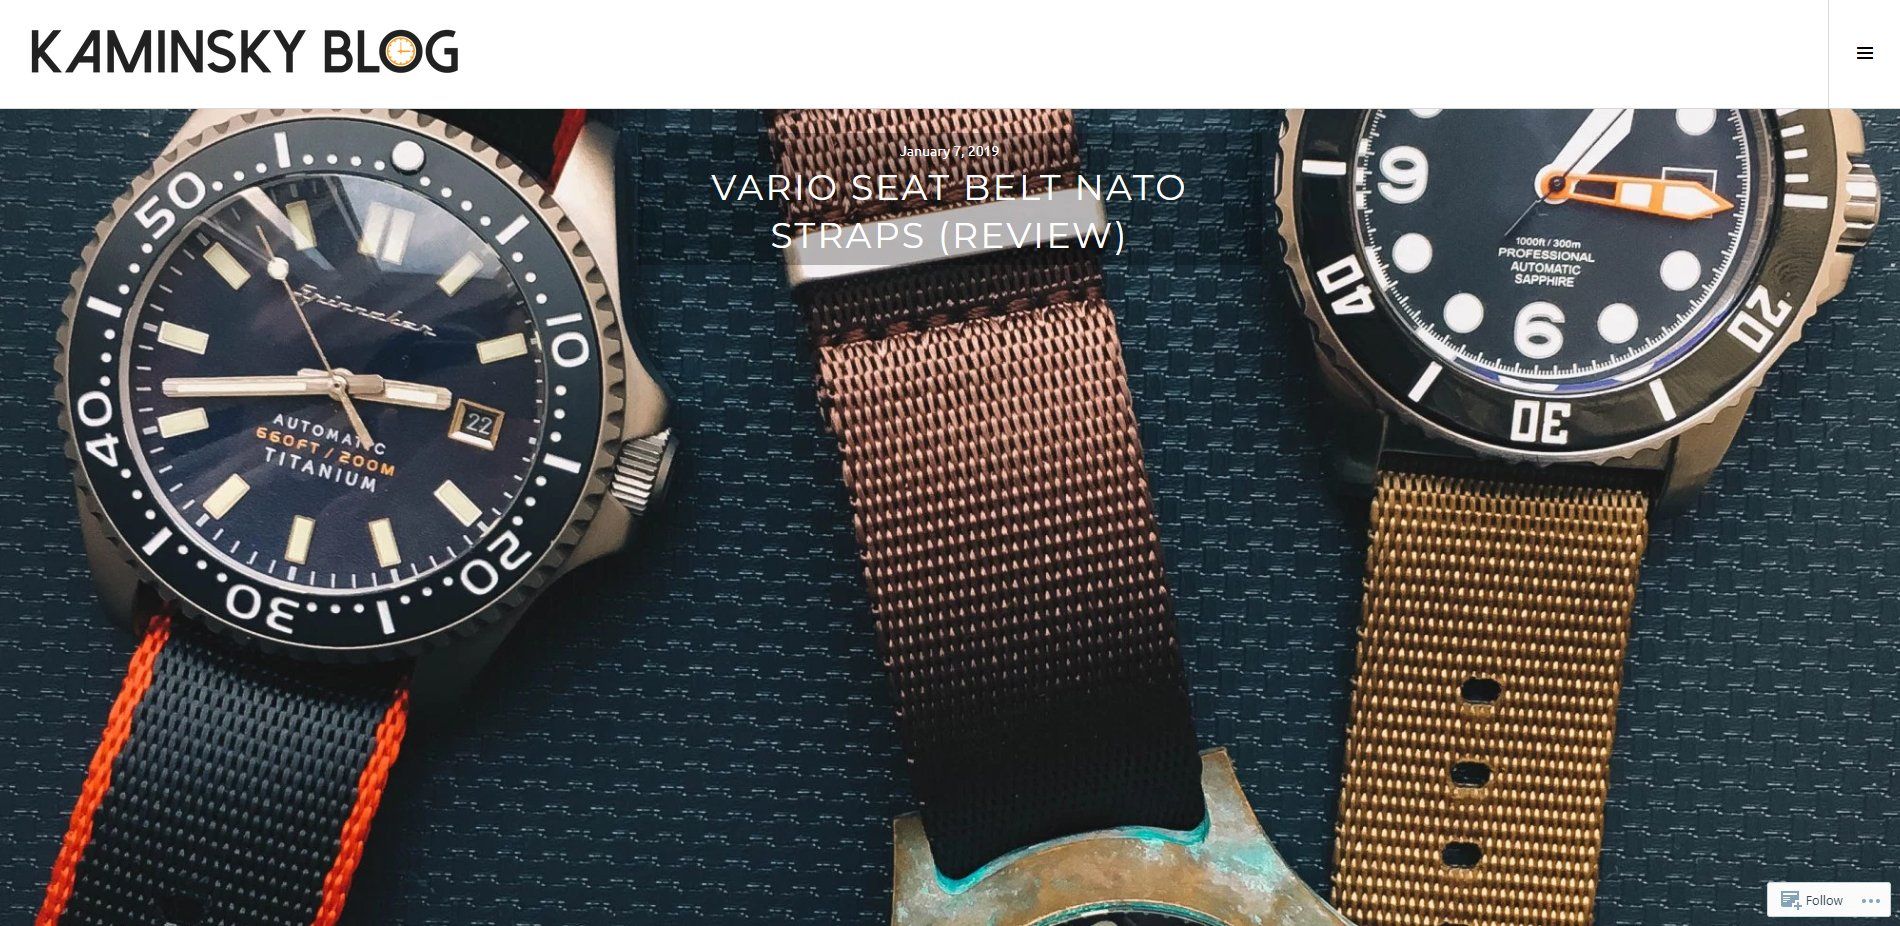 Vario Seat Belt Straps by Kaminsky Blog